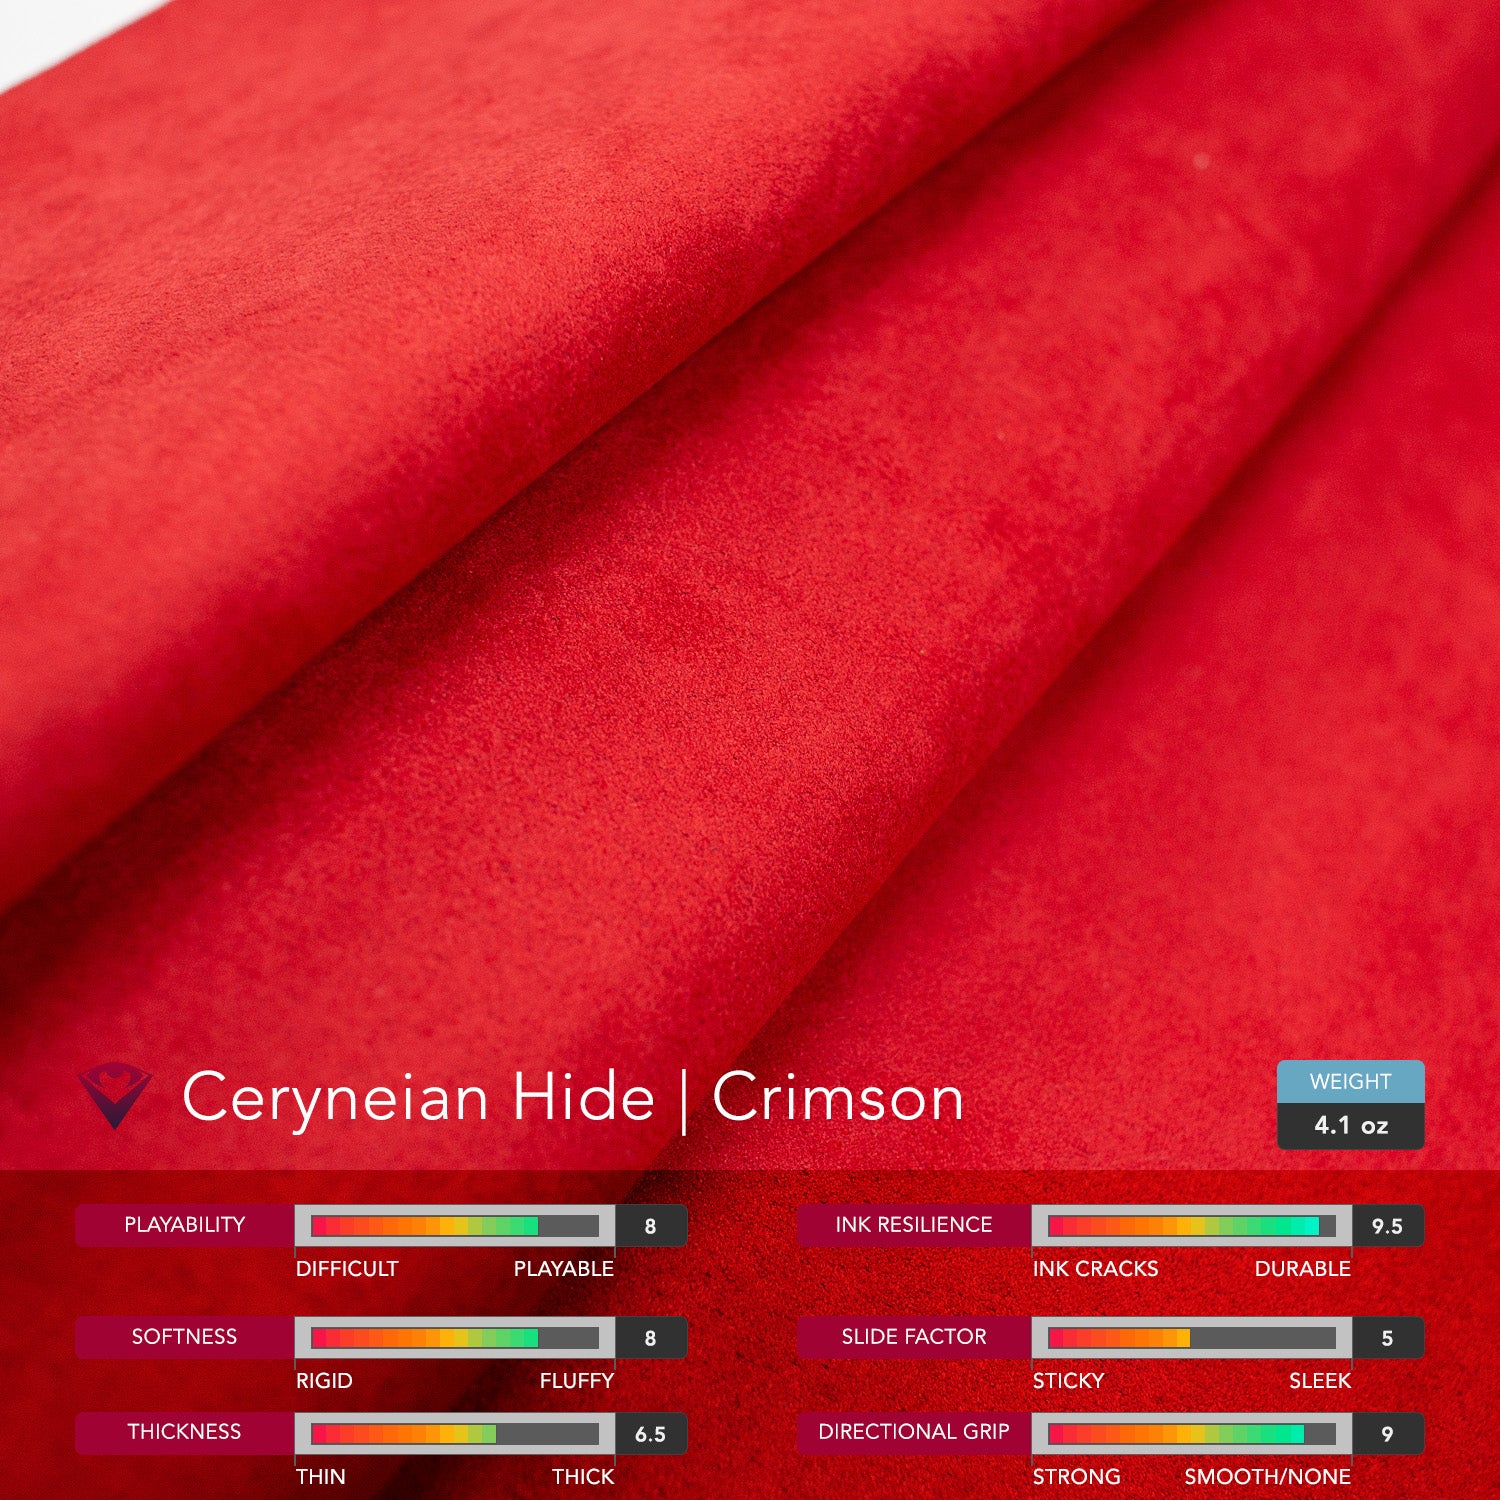 The Millennium Altar | Ceryneian Hide Crimson x Bronzed Ash *PRODUCTION ERROR*